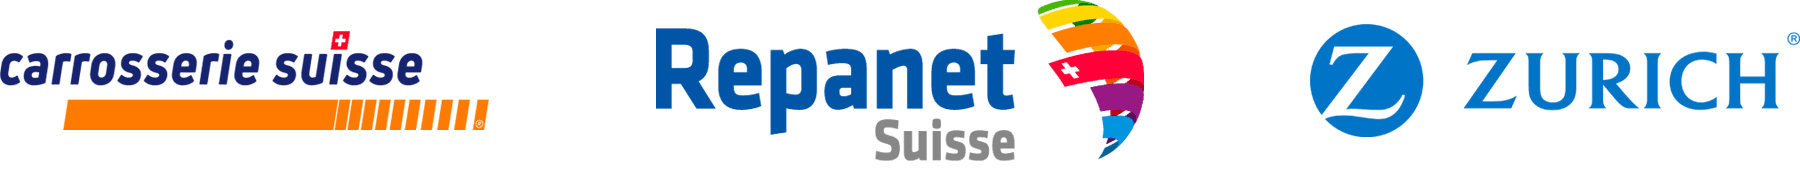 Carrosserie Suisse - Repanet - Zurich Logos